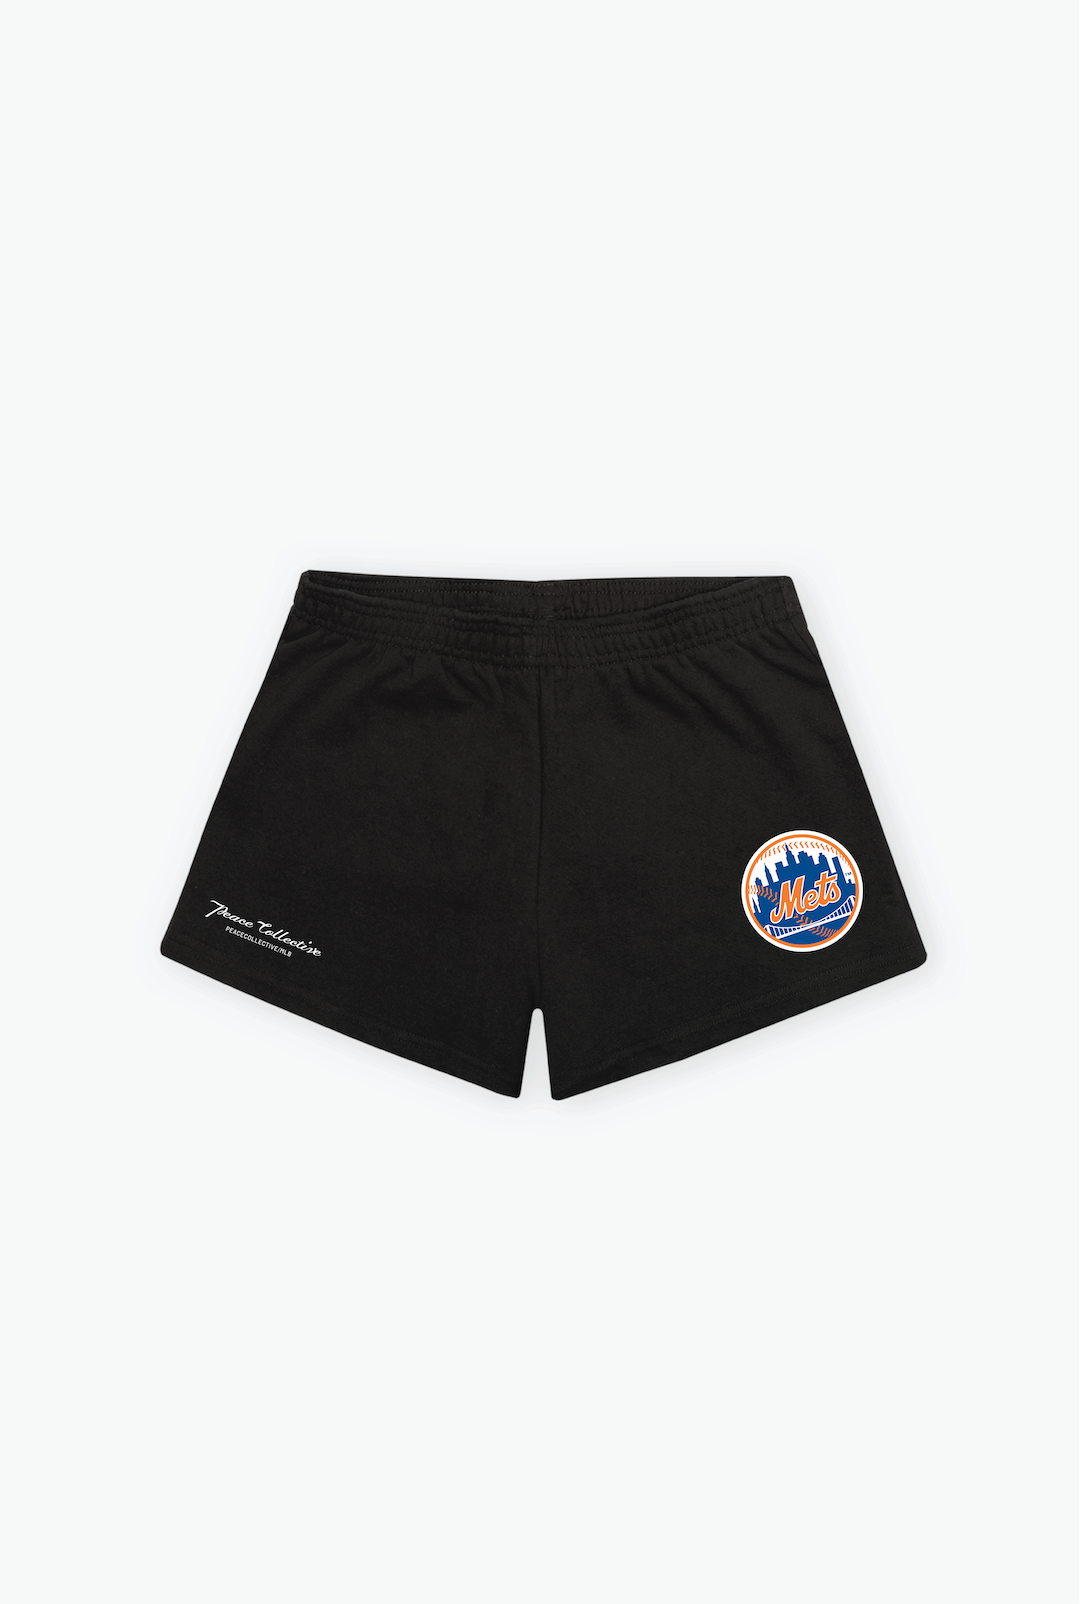 New York Mets Logo Women's Fleece Shorts - Black